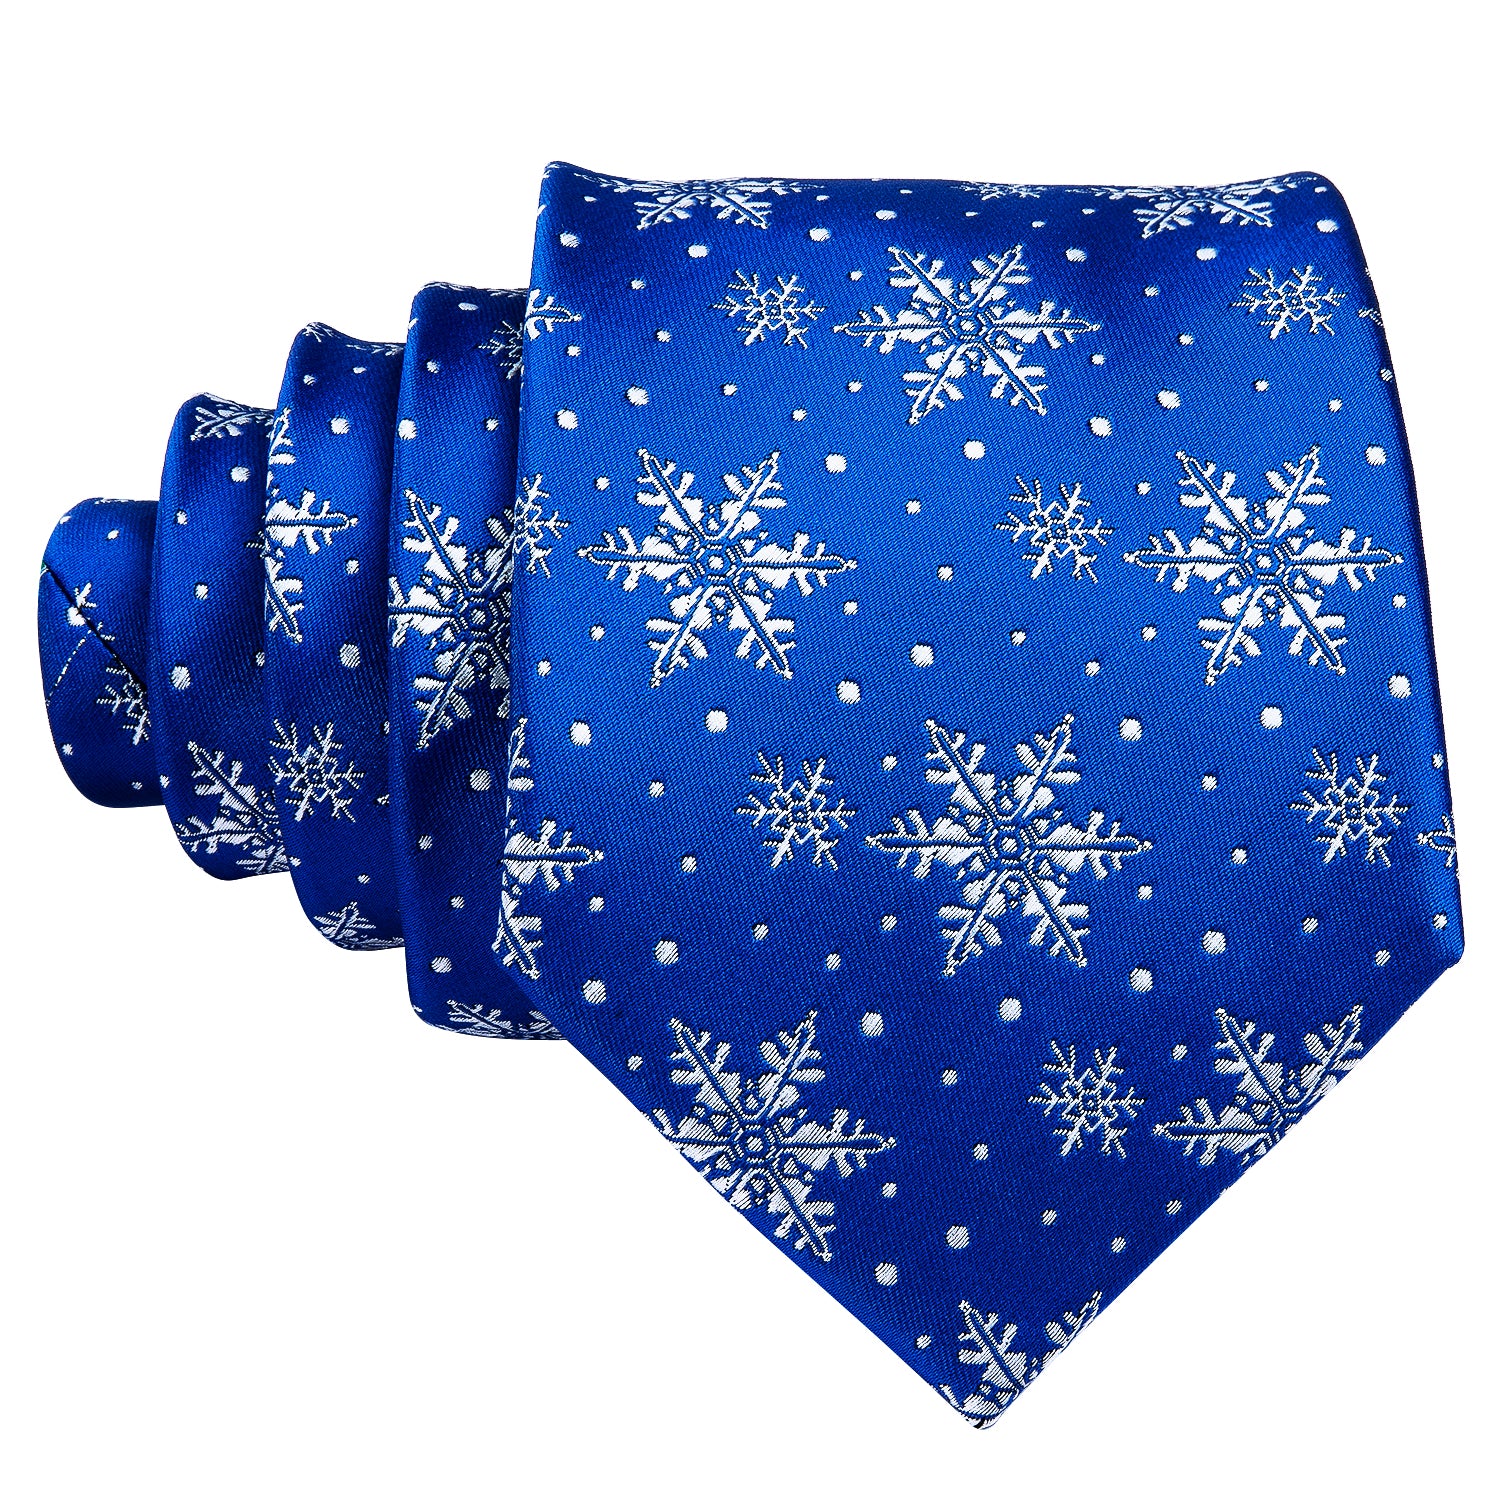 Barry.wang Christmas Tie Blue White Snowflake Silk Men's Tie Pocket Square Cufflinks Set